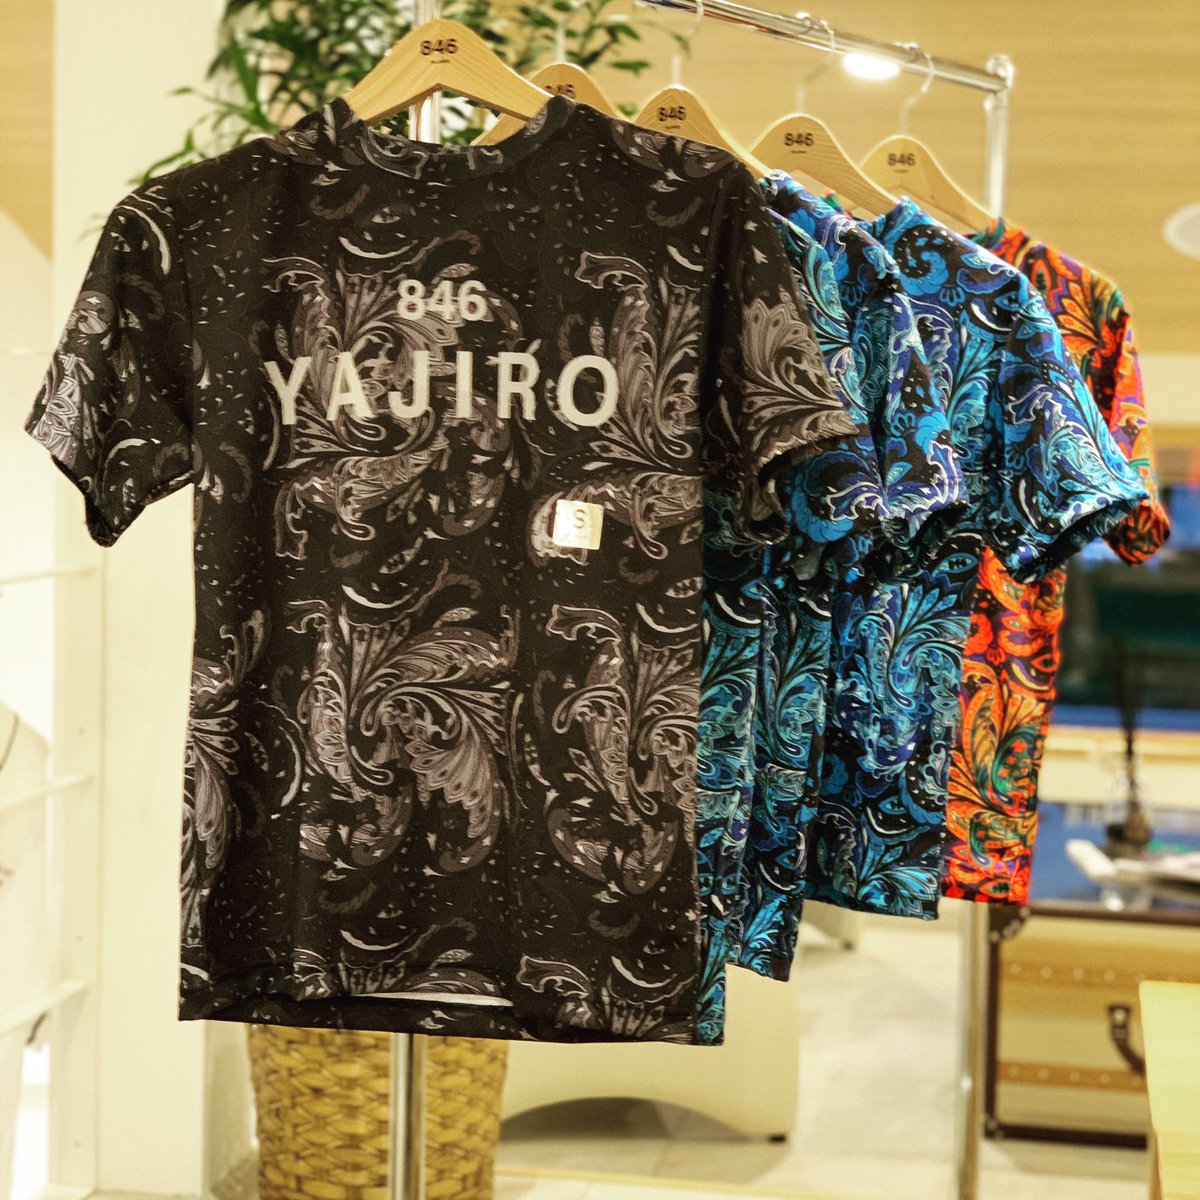 846yajiro tシャツ  ペイズリー柄オシャレ 最高級プロアスリートウェア